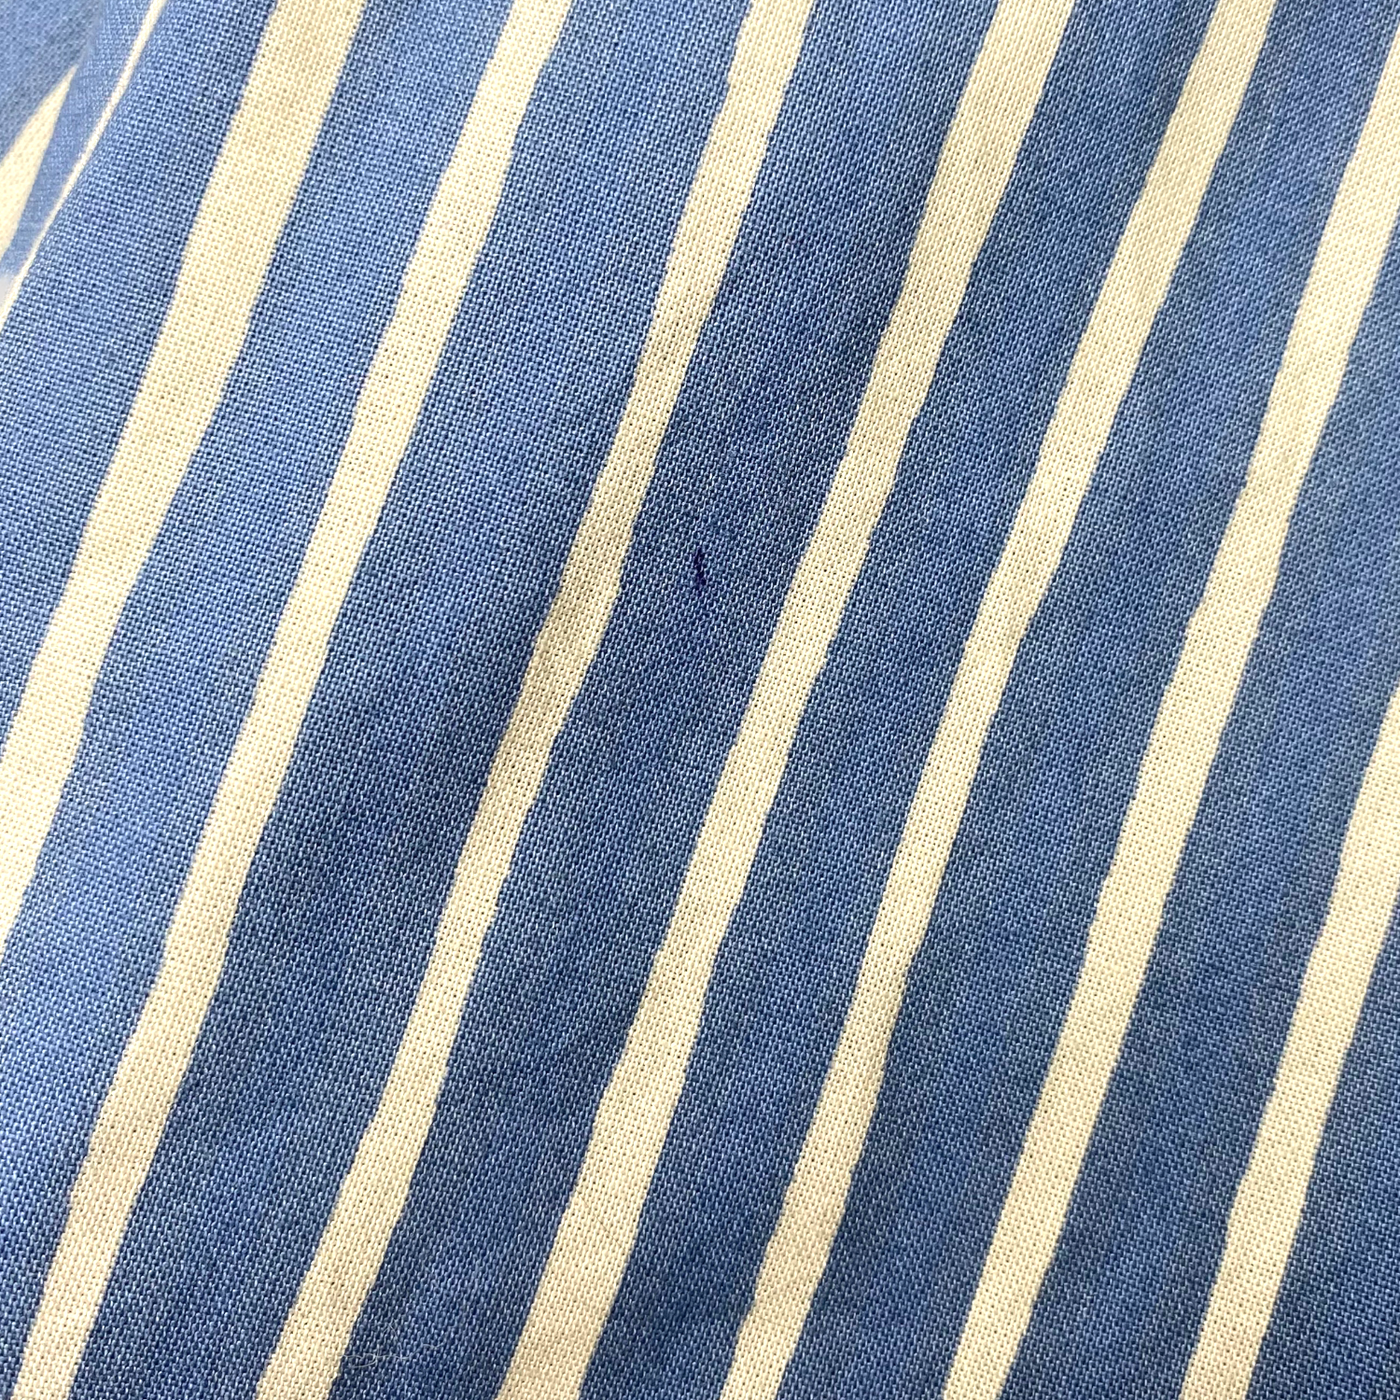 Marimekko jokapoika shirt, blue/white | 130cm